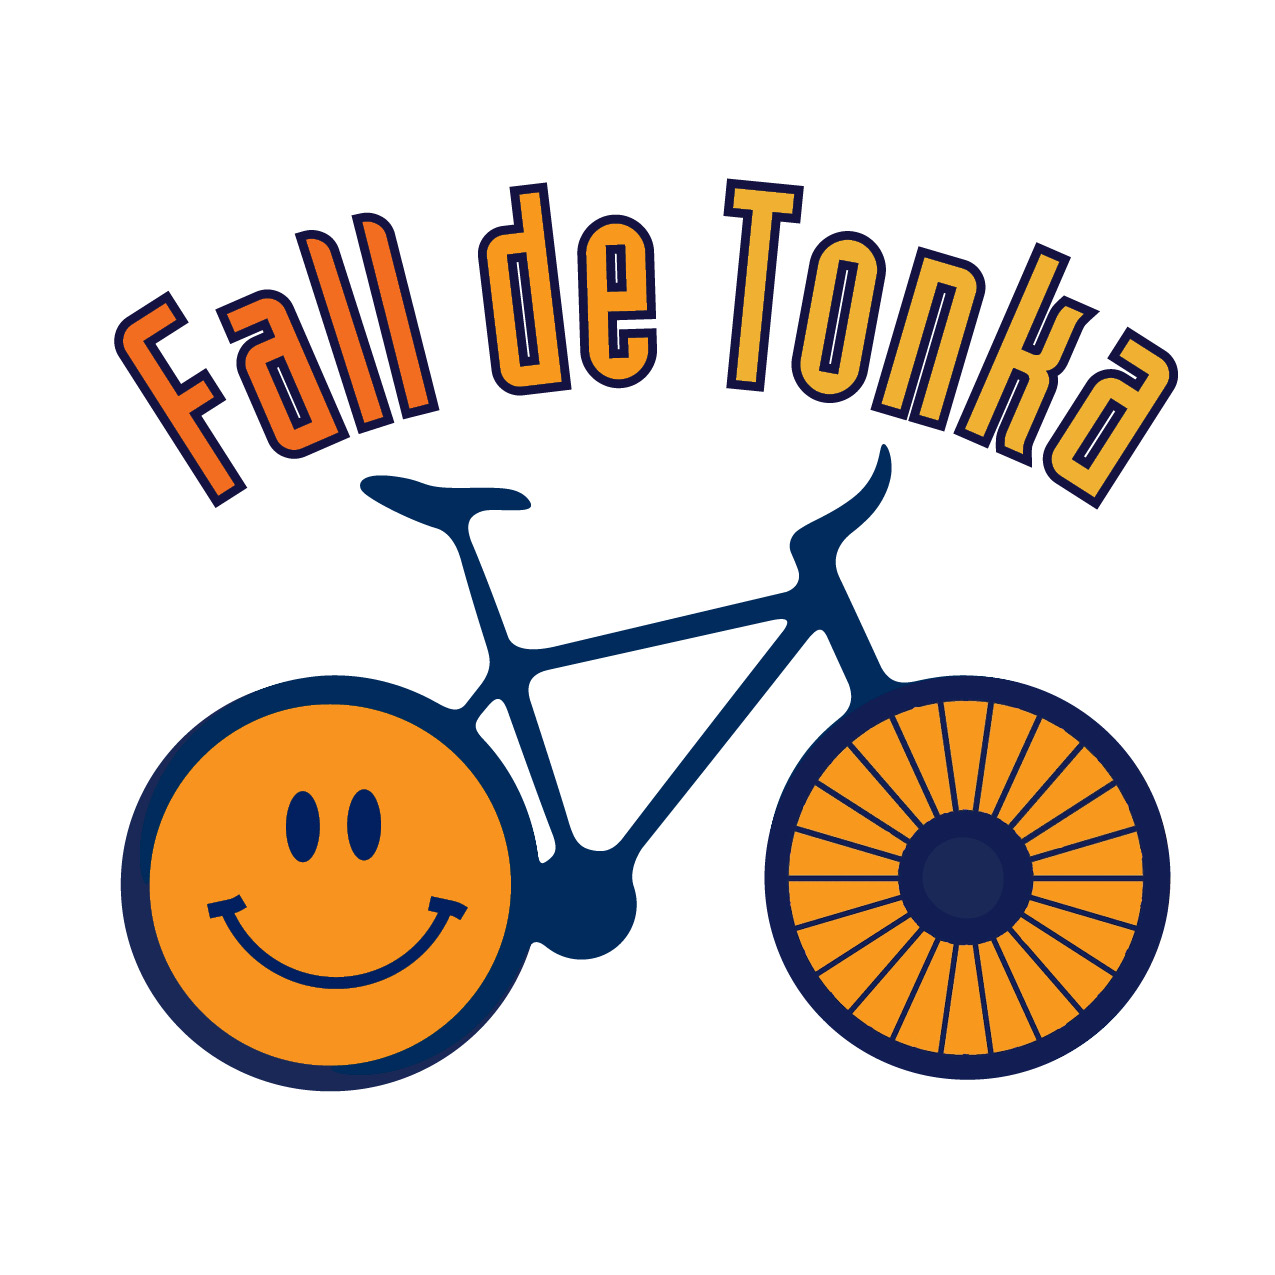 fall de tonka logo